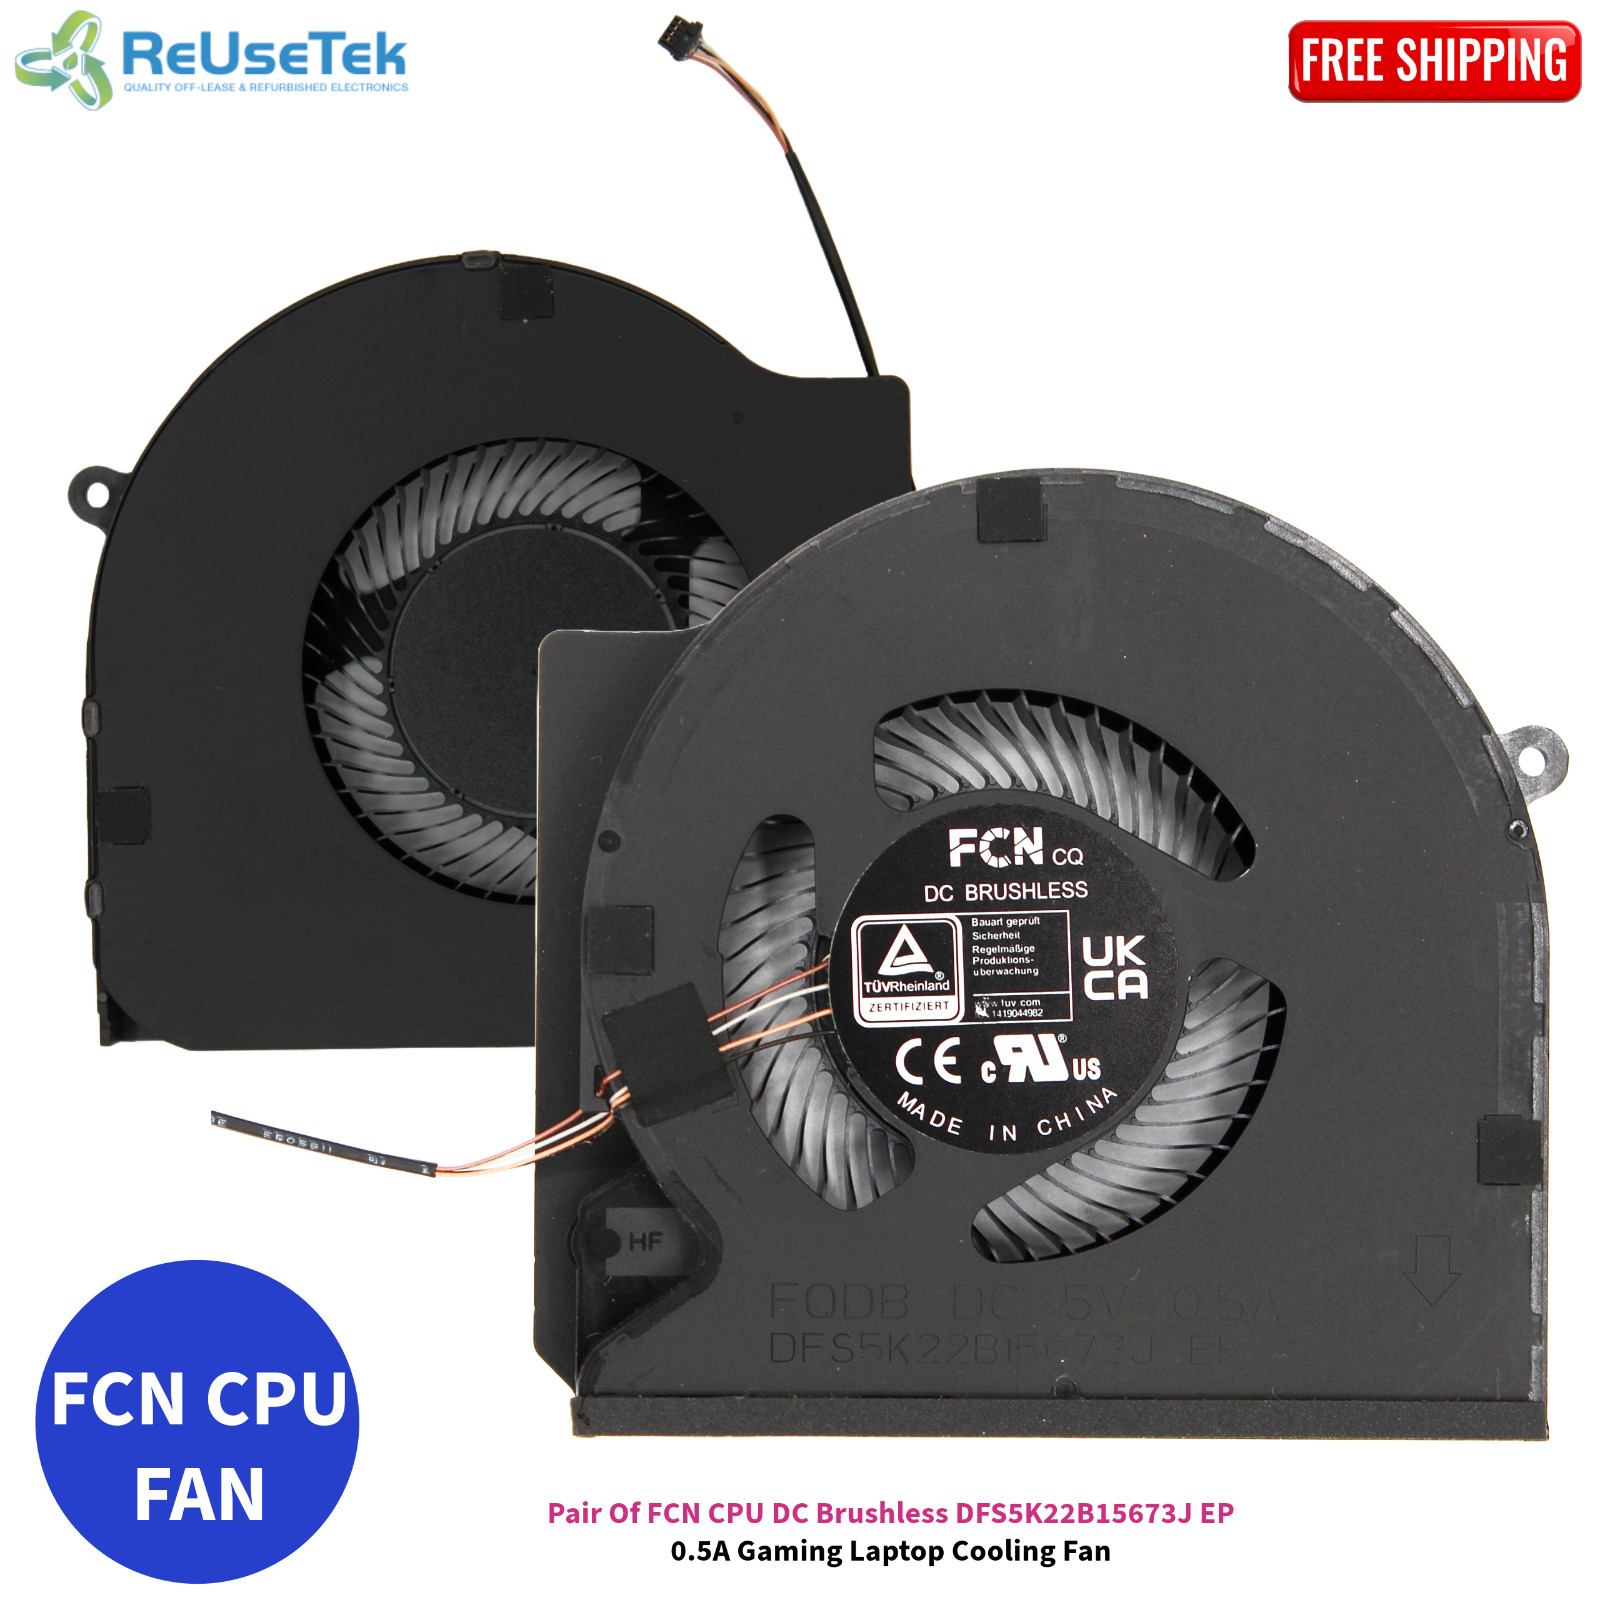 Pair Of FCN CPU DC Brushless DFS5K22B15673J EP 0.5A Gaming Laptop Cooling Fan